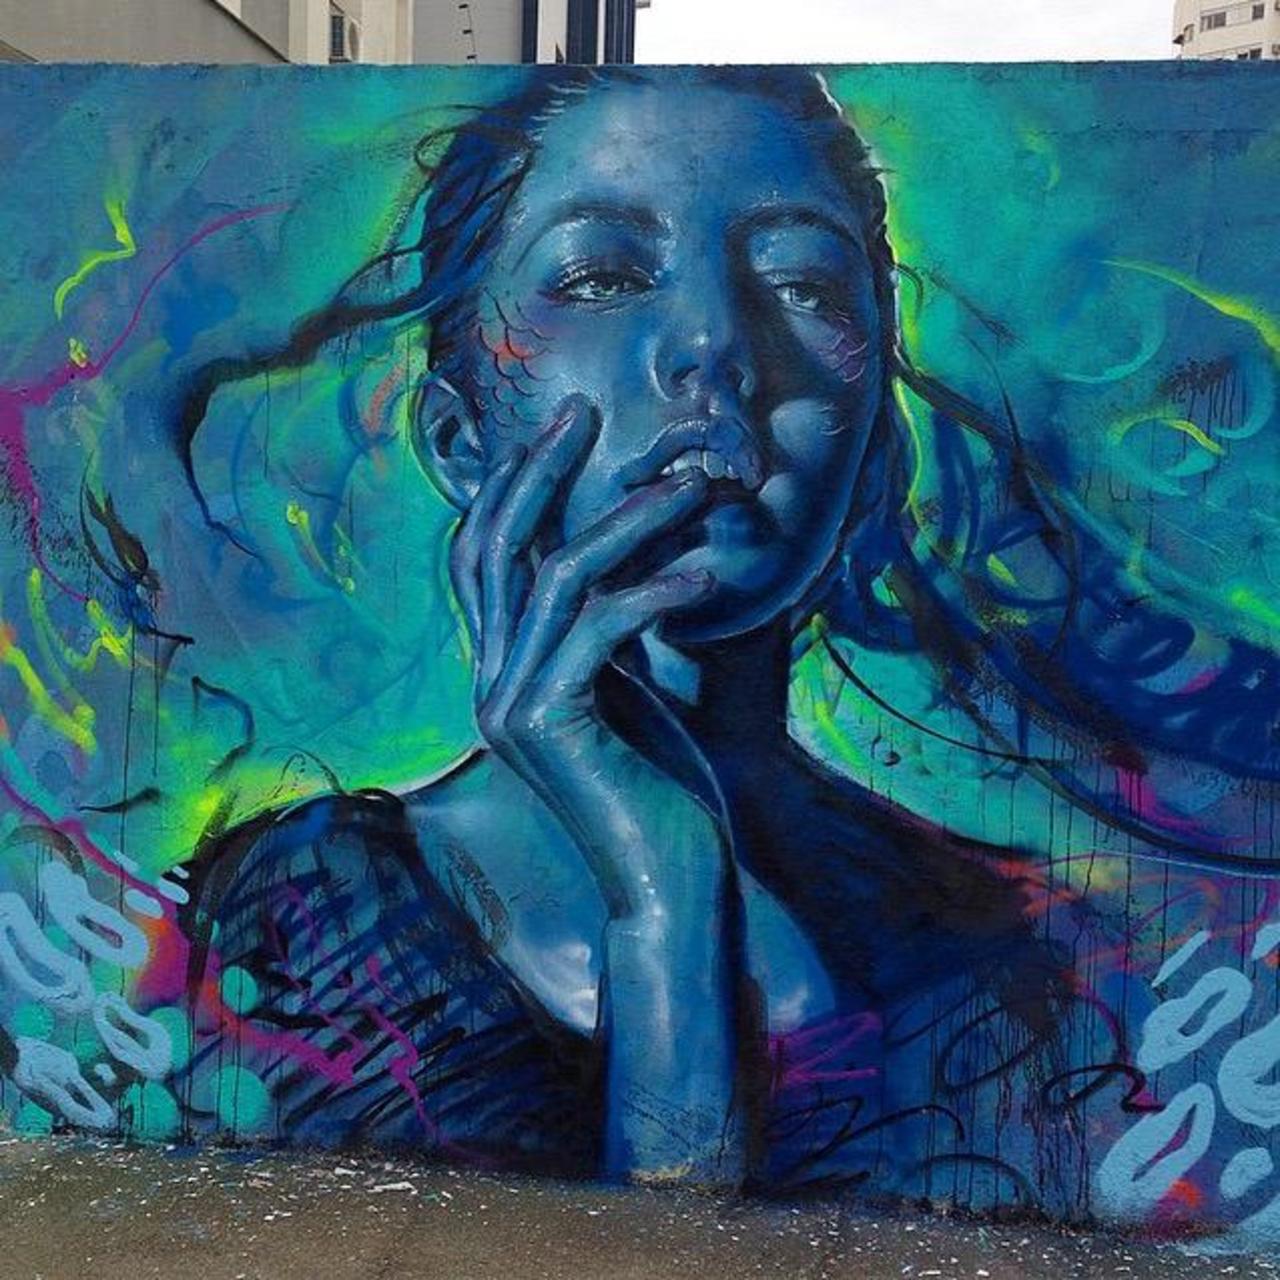 Thiago Valdi new Street Art piece titled 'Day Dreamer' #art #mural #graffiti #streetart http://t.co/3UodbQm48I …… http://twitter.com/charlesjackso14/status/652732462272000000